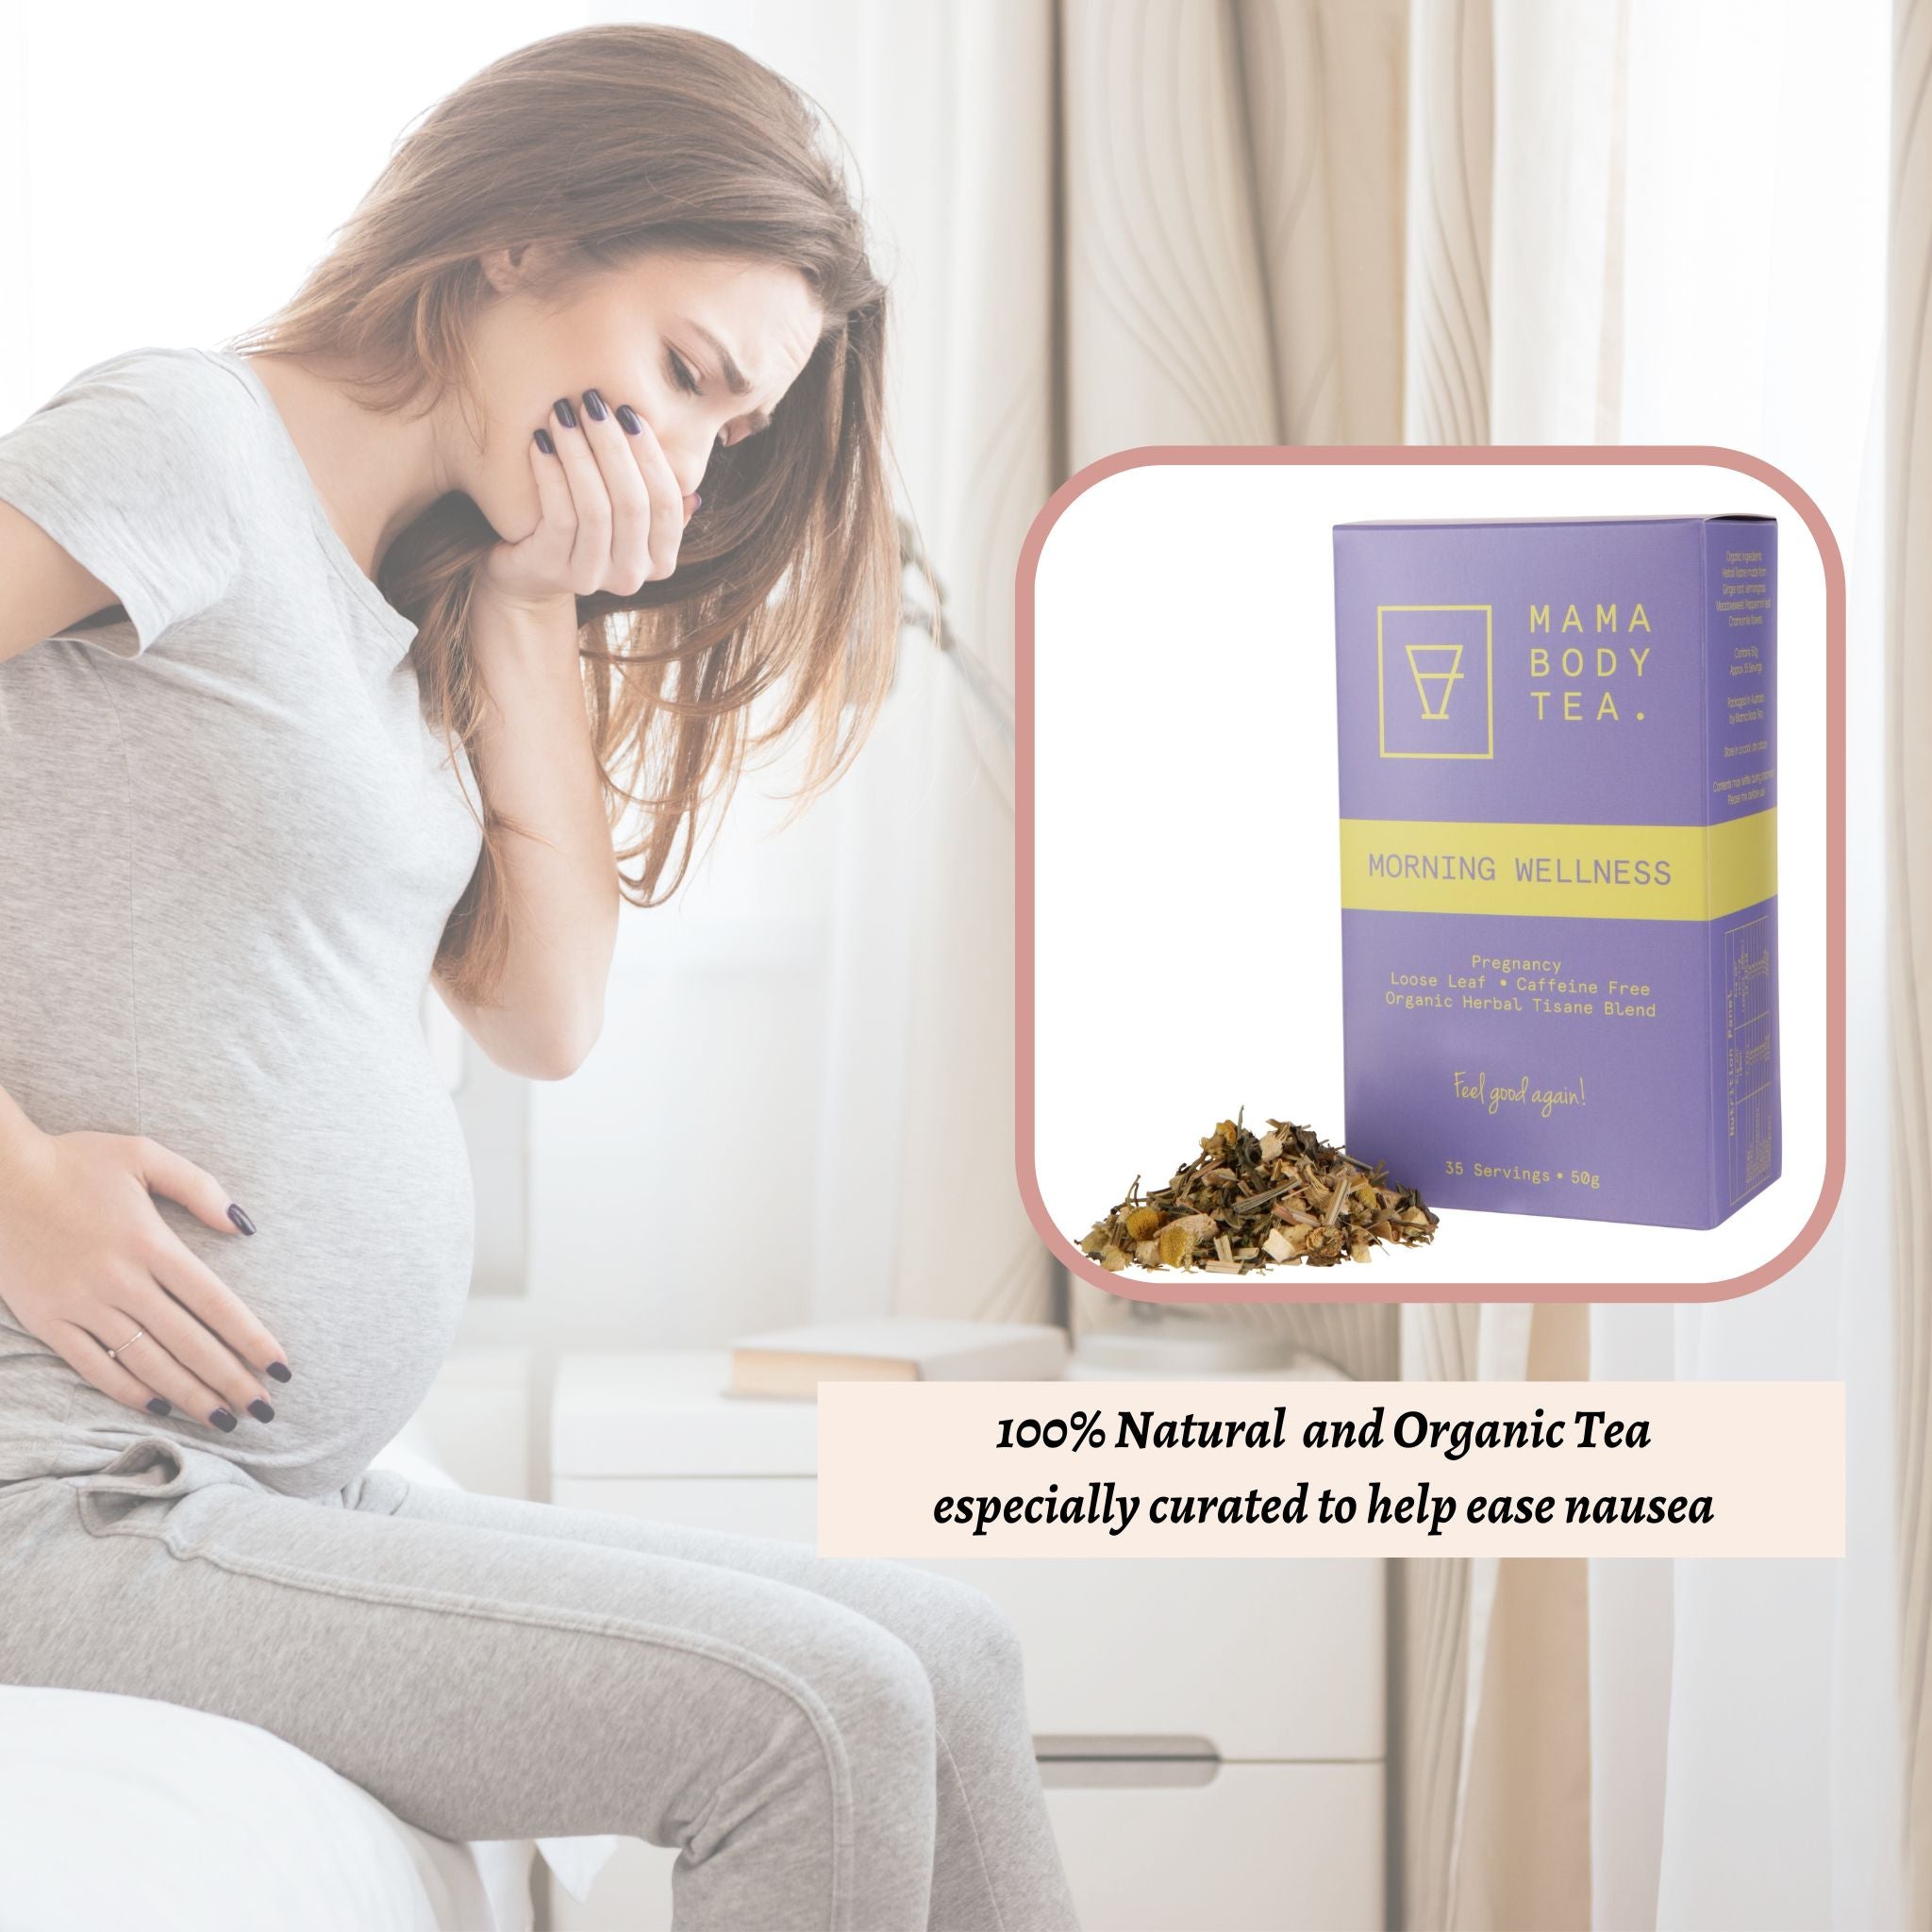 Morning sickness tea for pregnancy